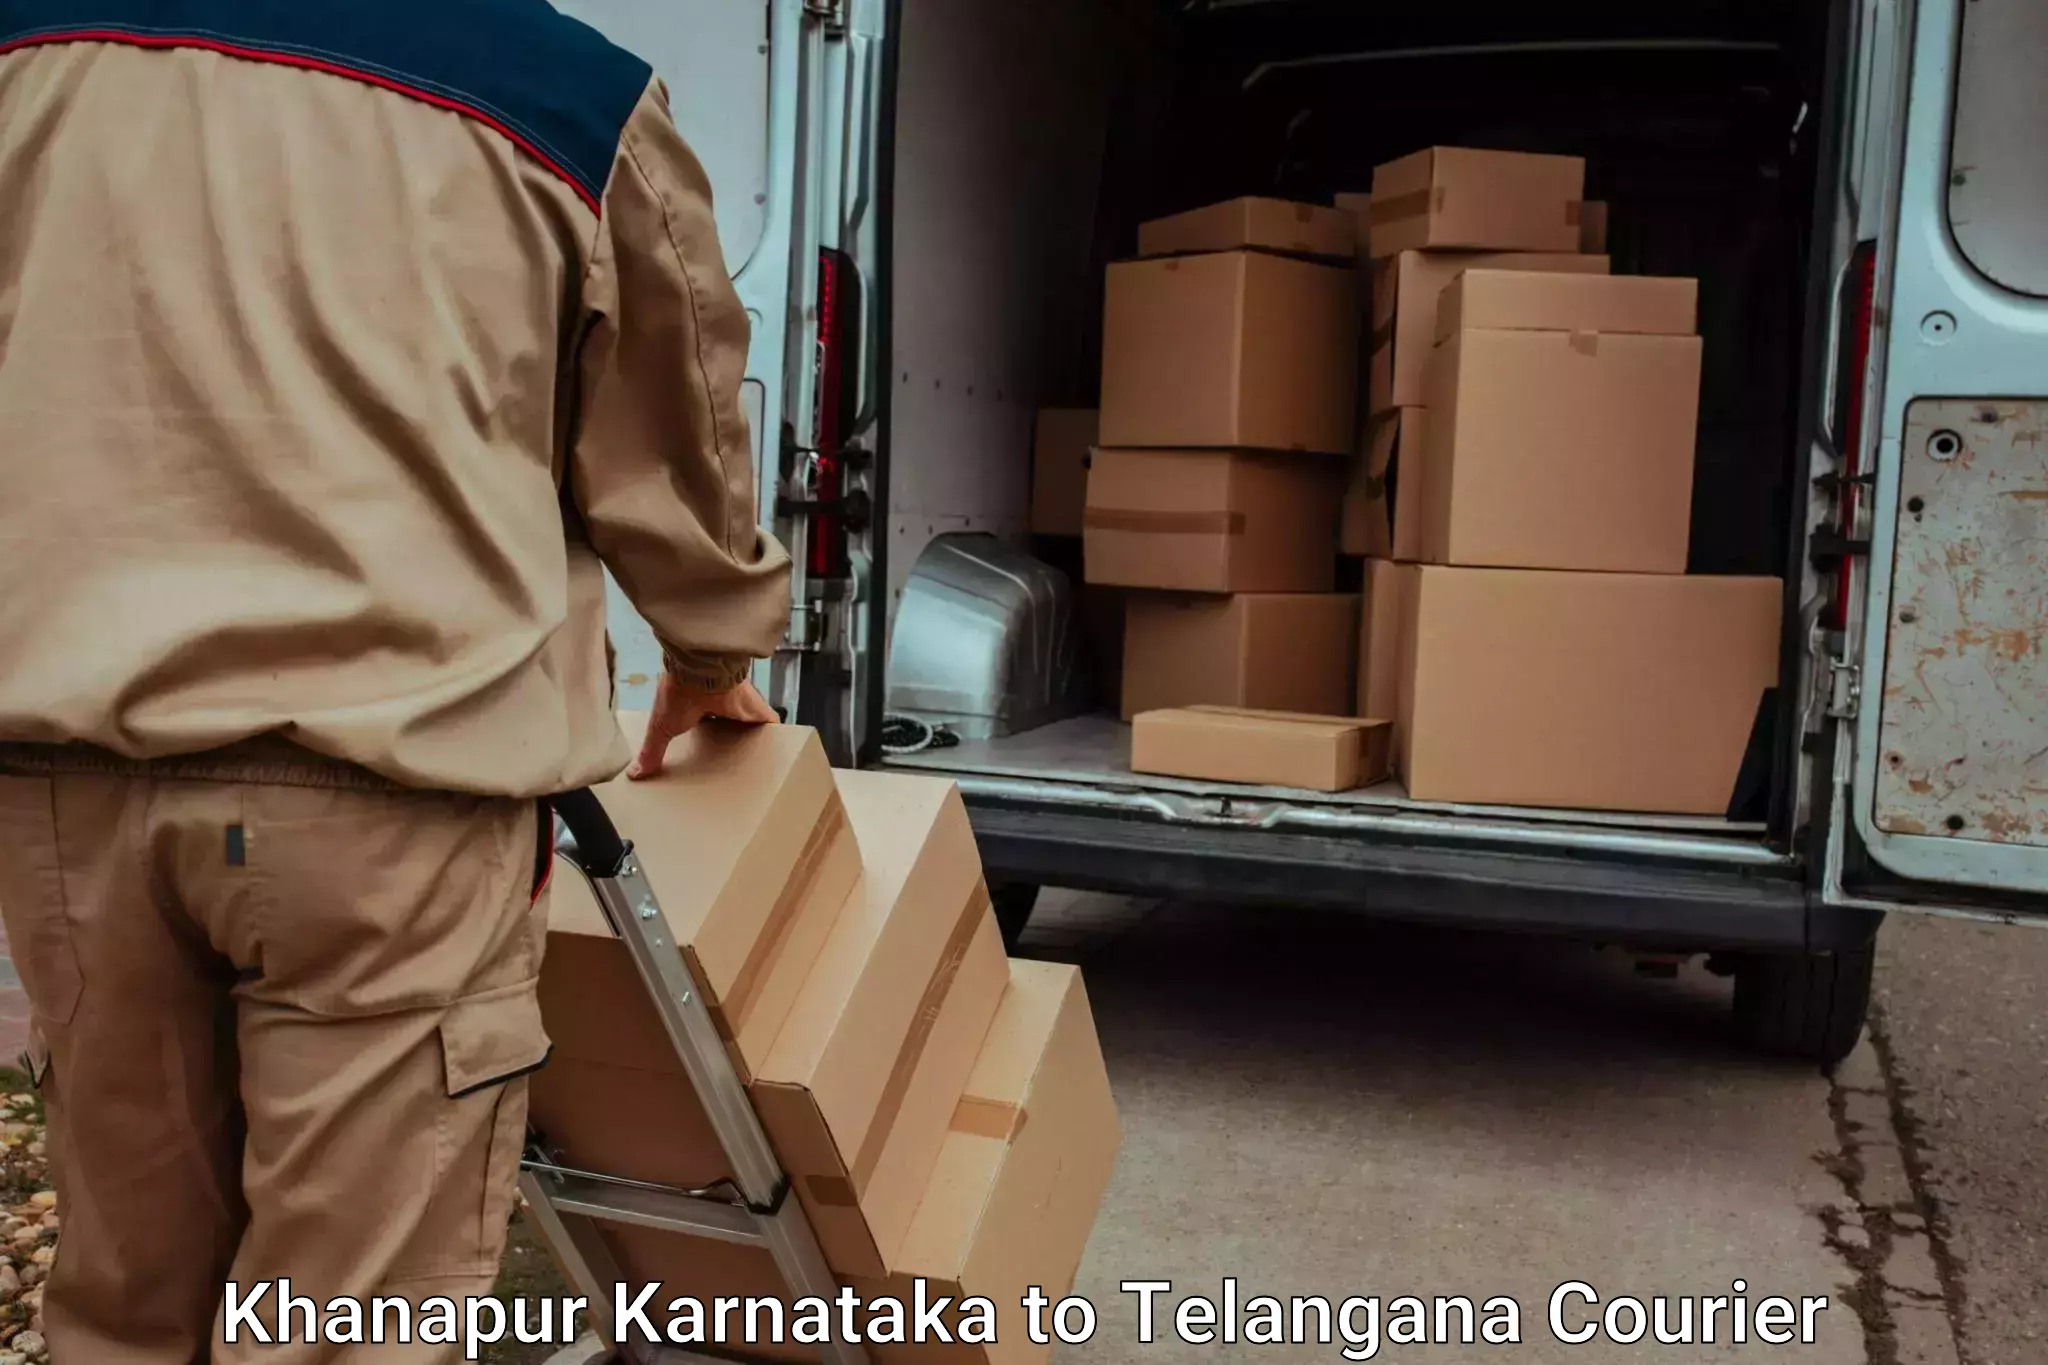 Furniture moving specialists Khanapur Karnataka to Alair